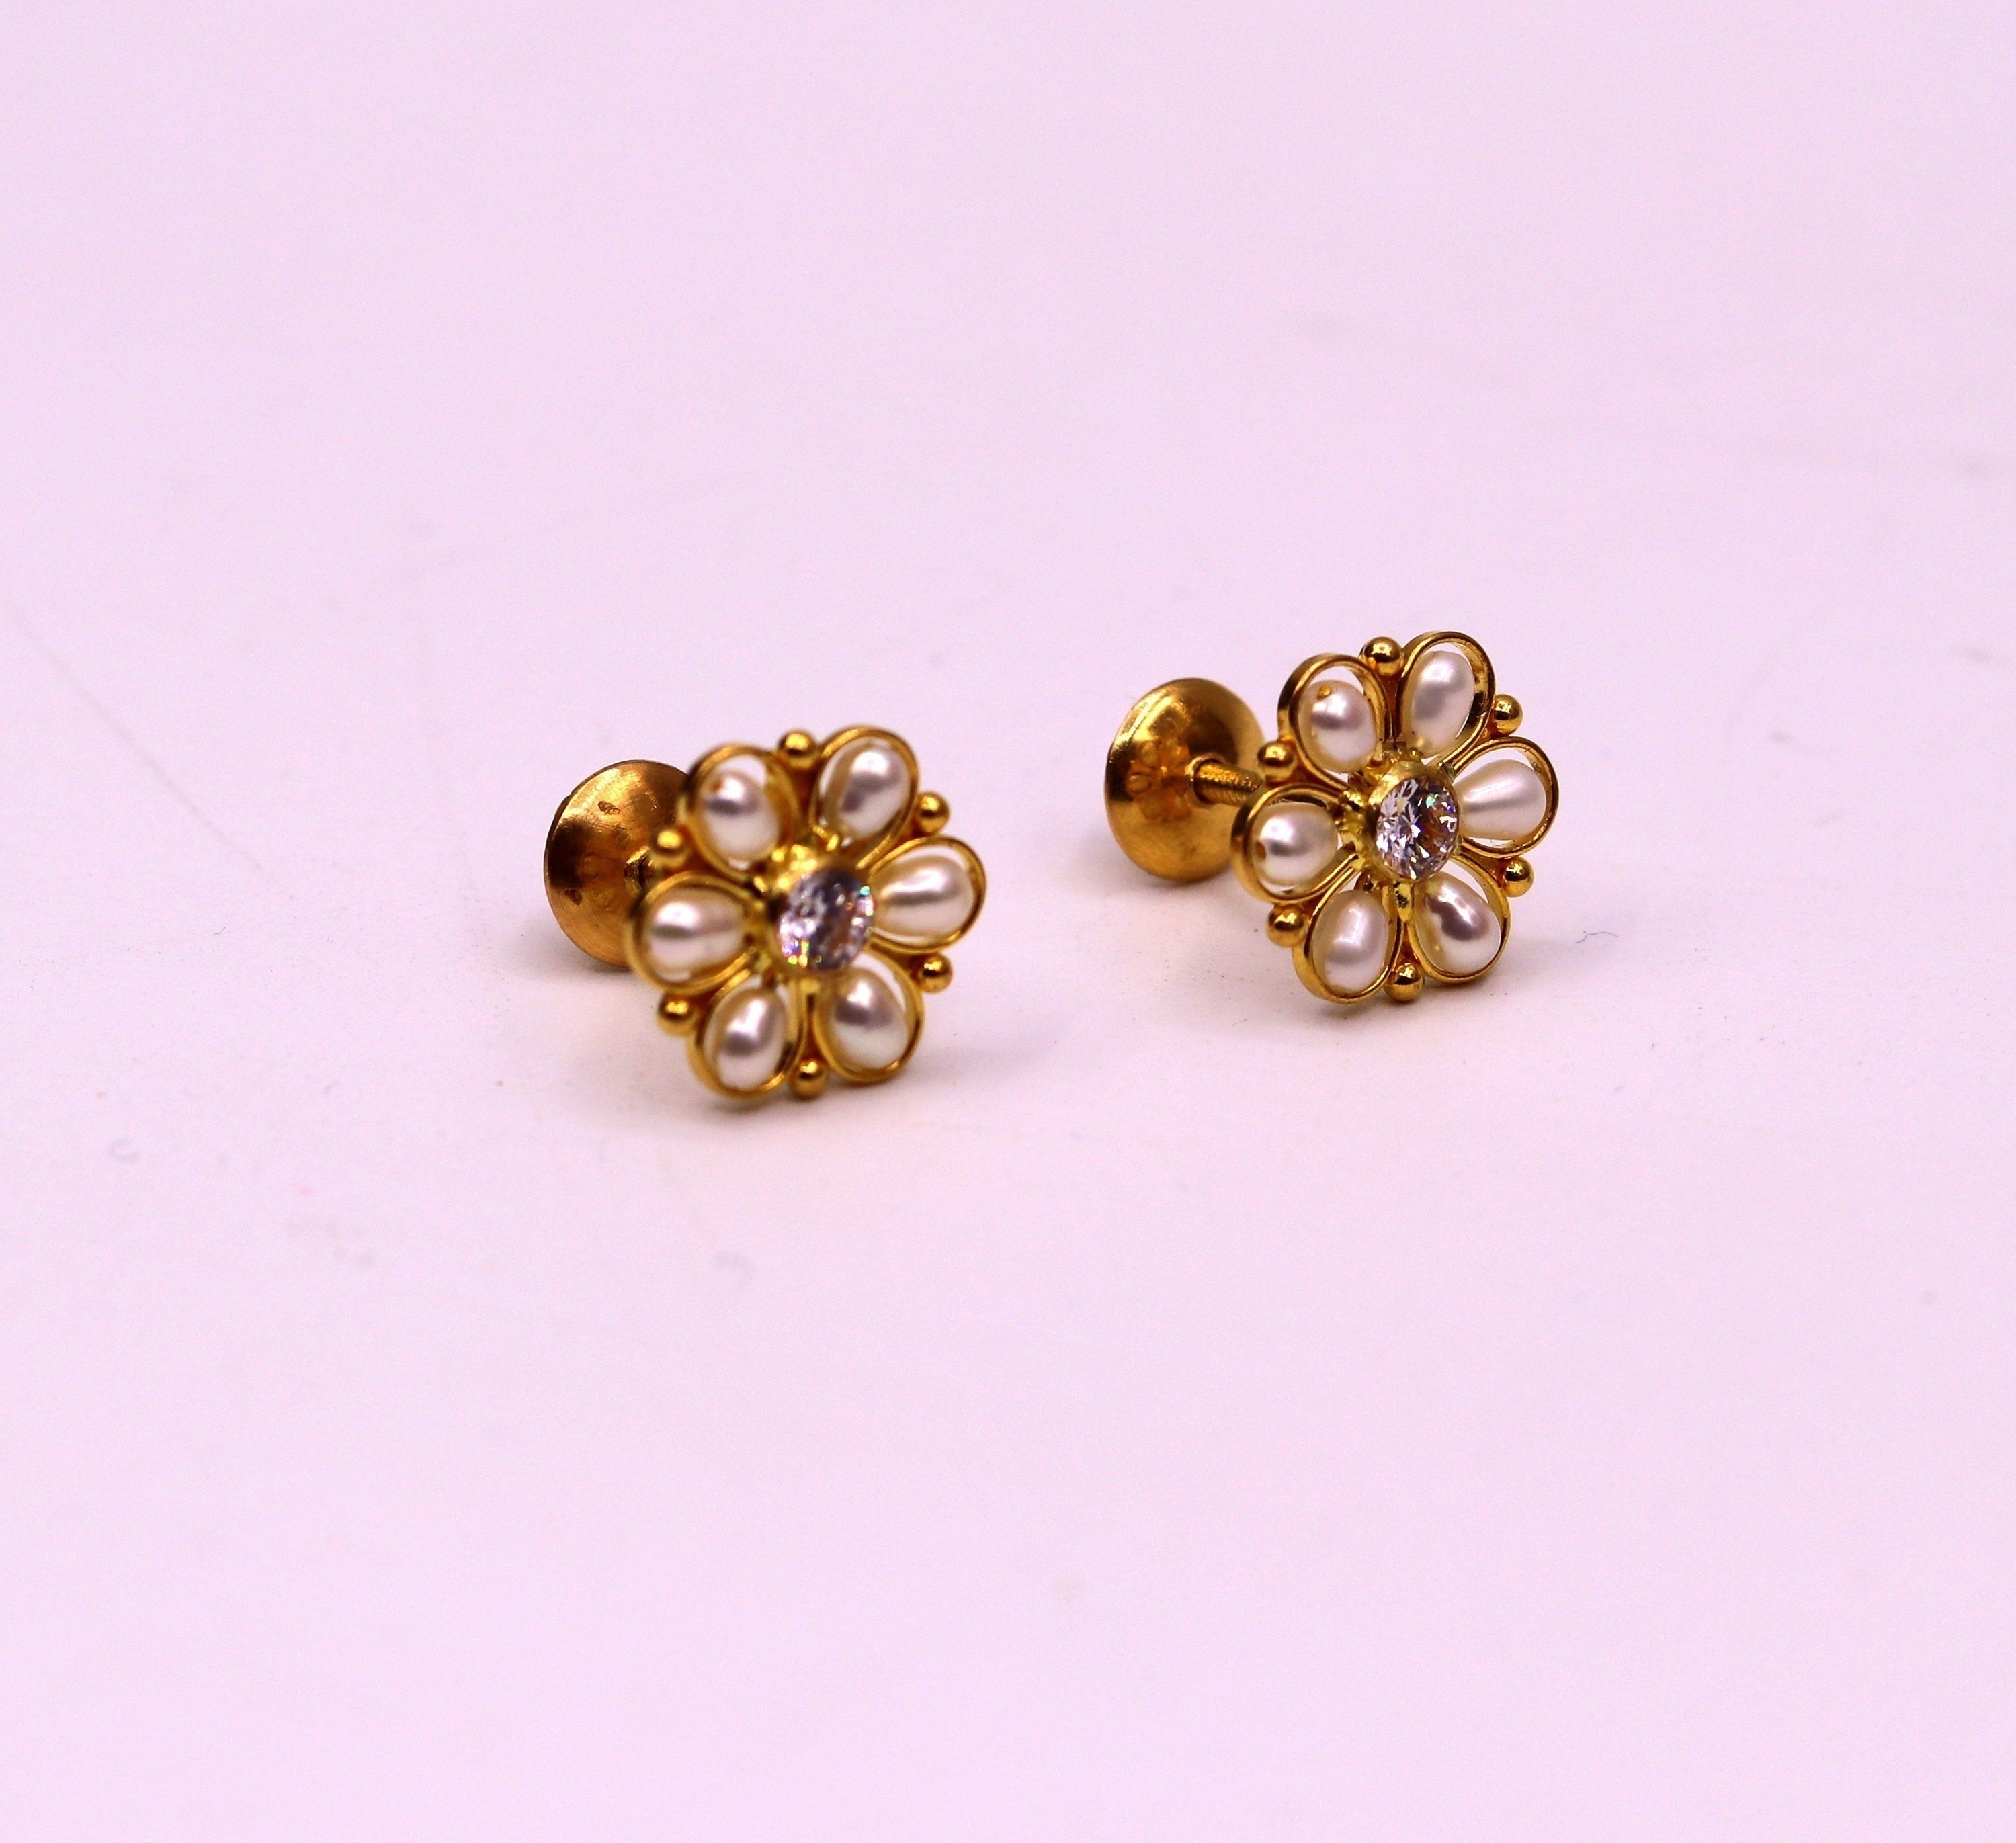 Red Garnet Stud Earrings 14K Yellow Gold 2.00 Carat HandMade Birthstone